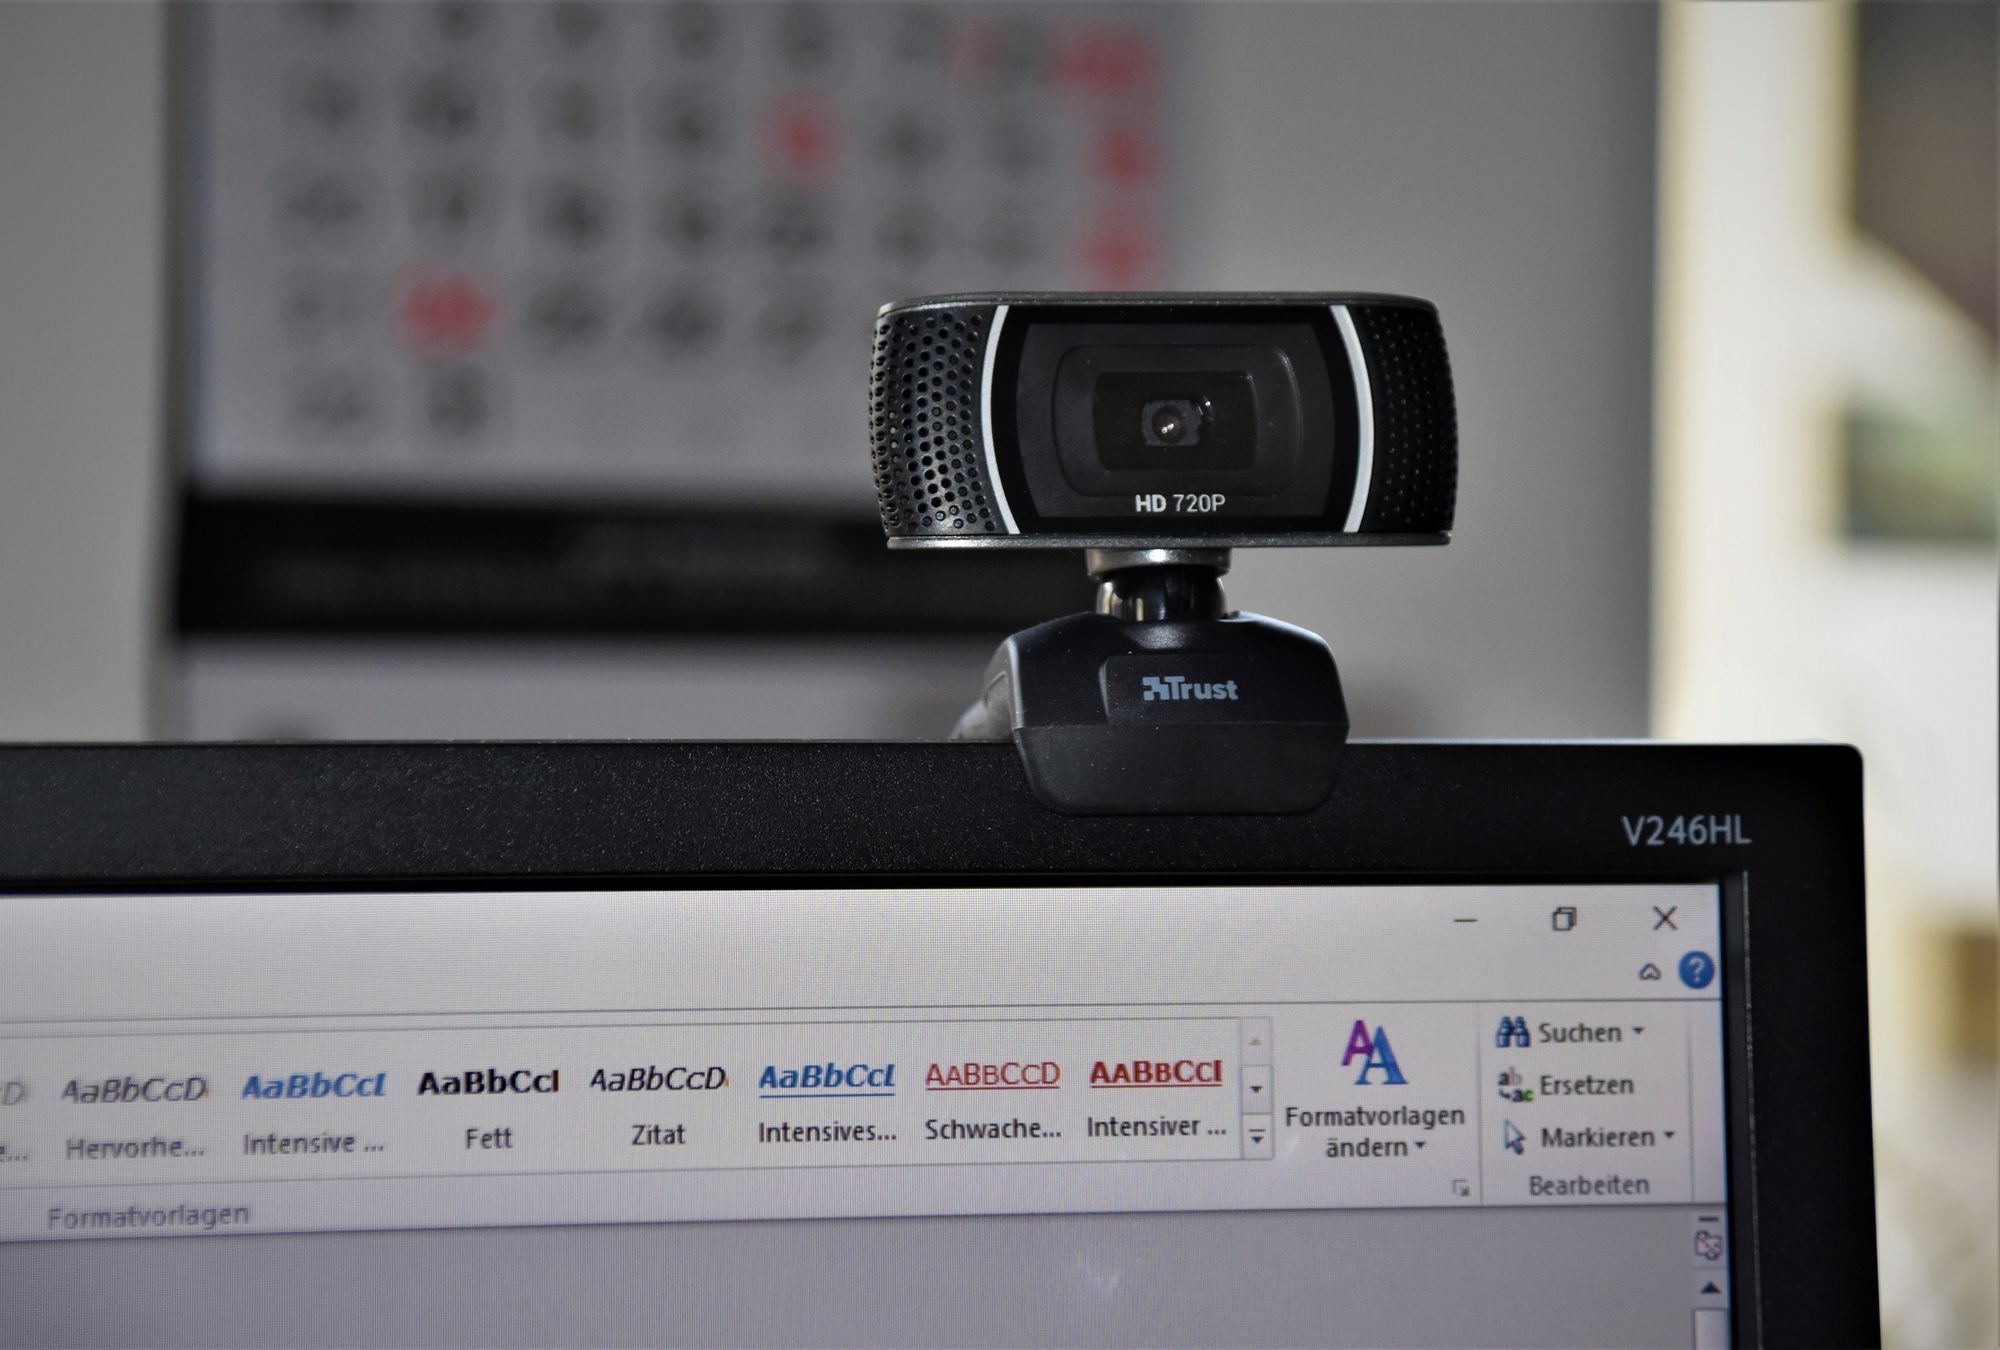 Benefits of using camera during virtual meetings